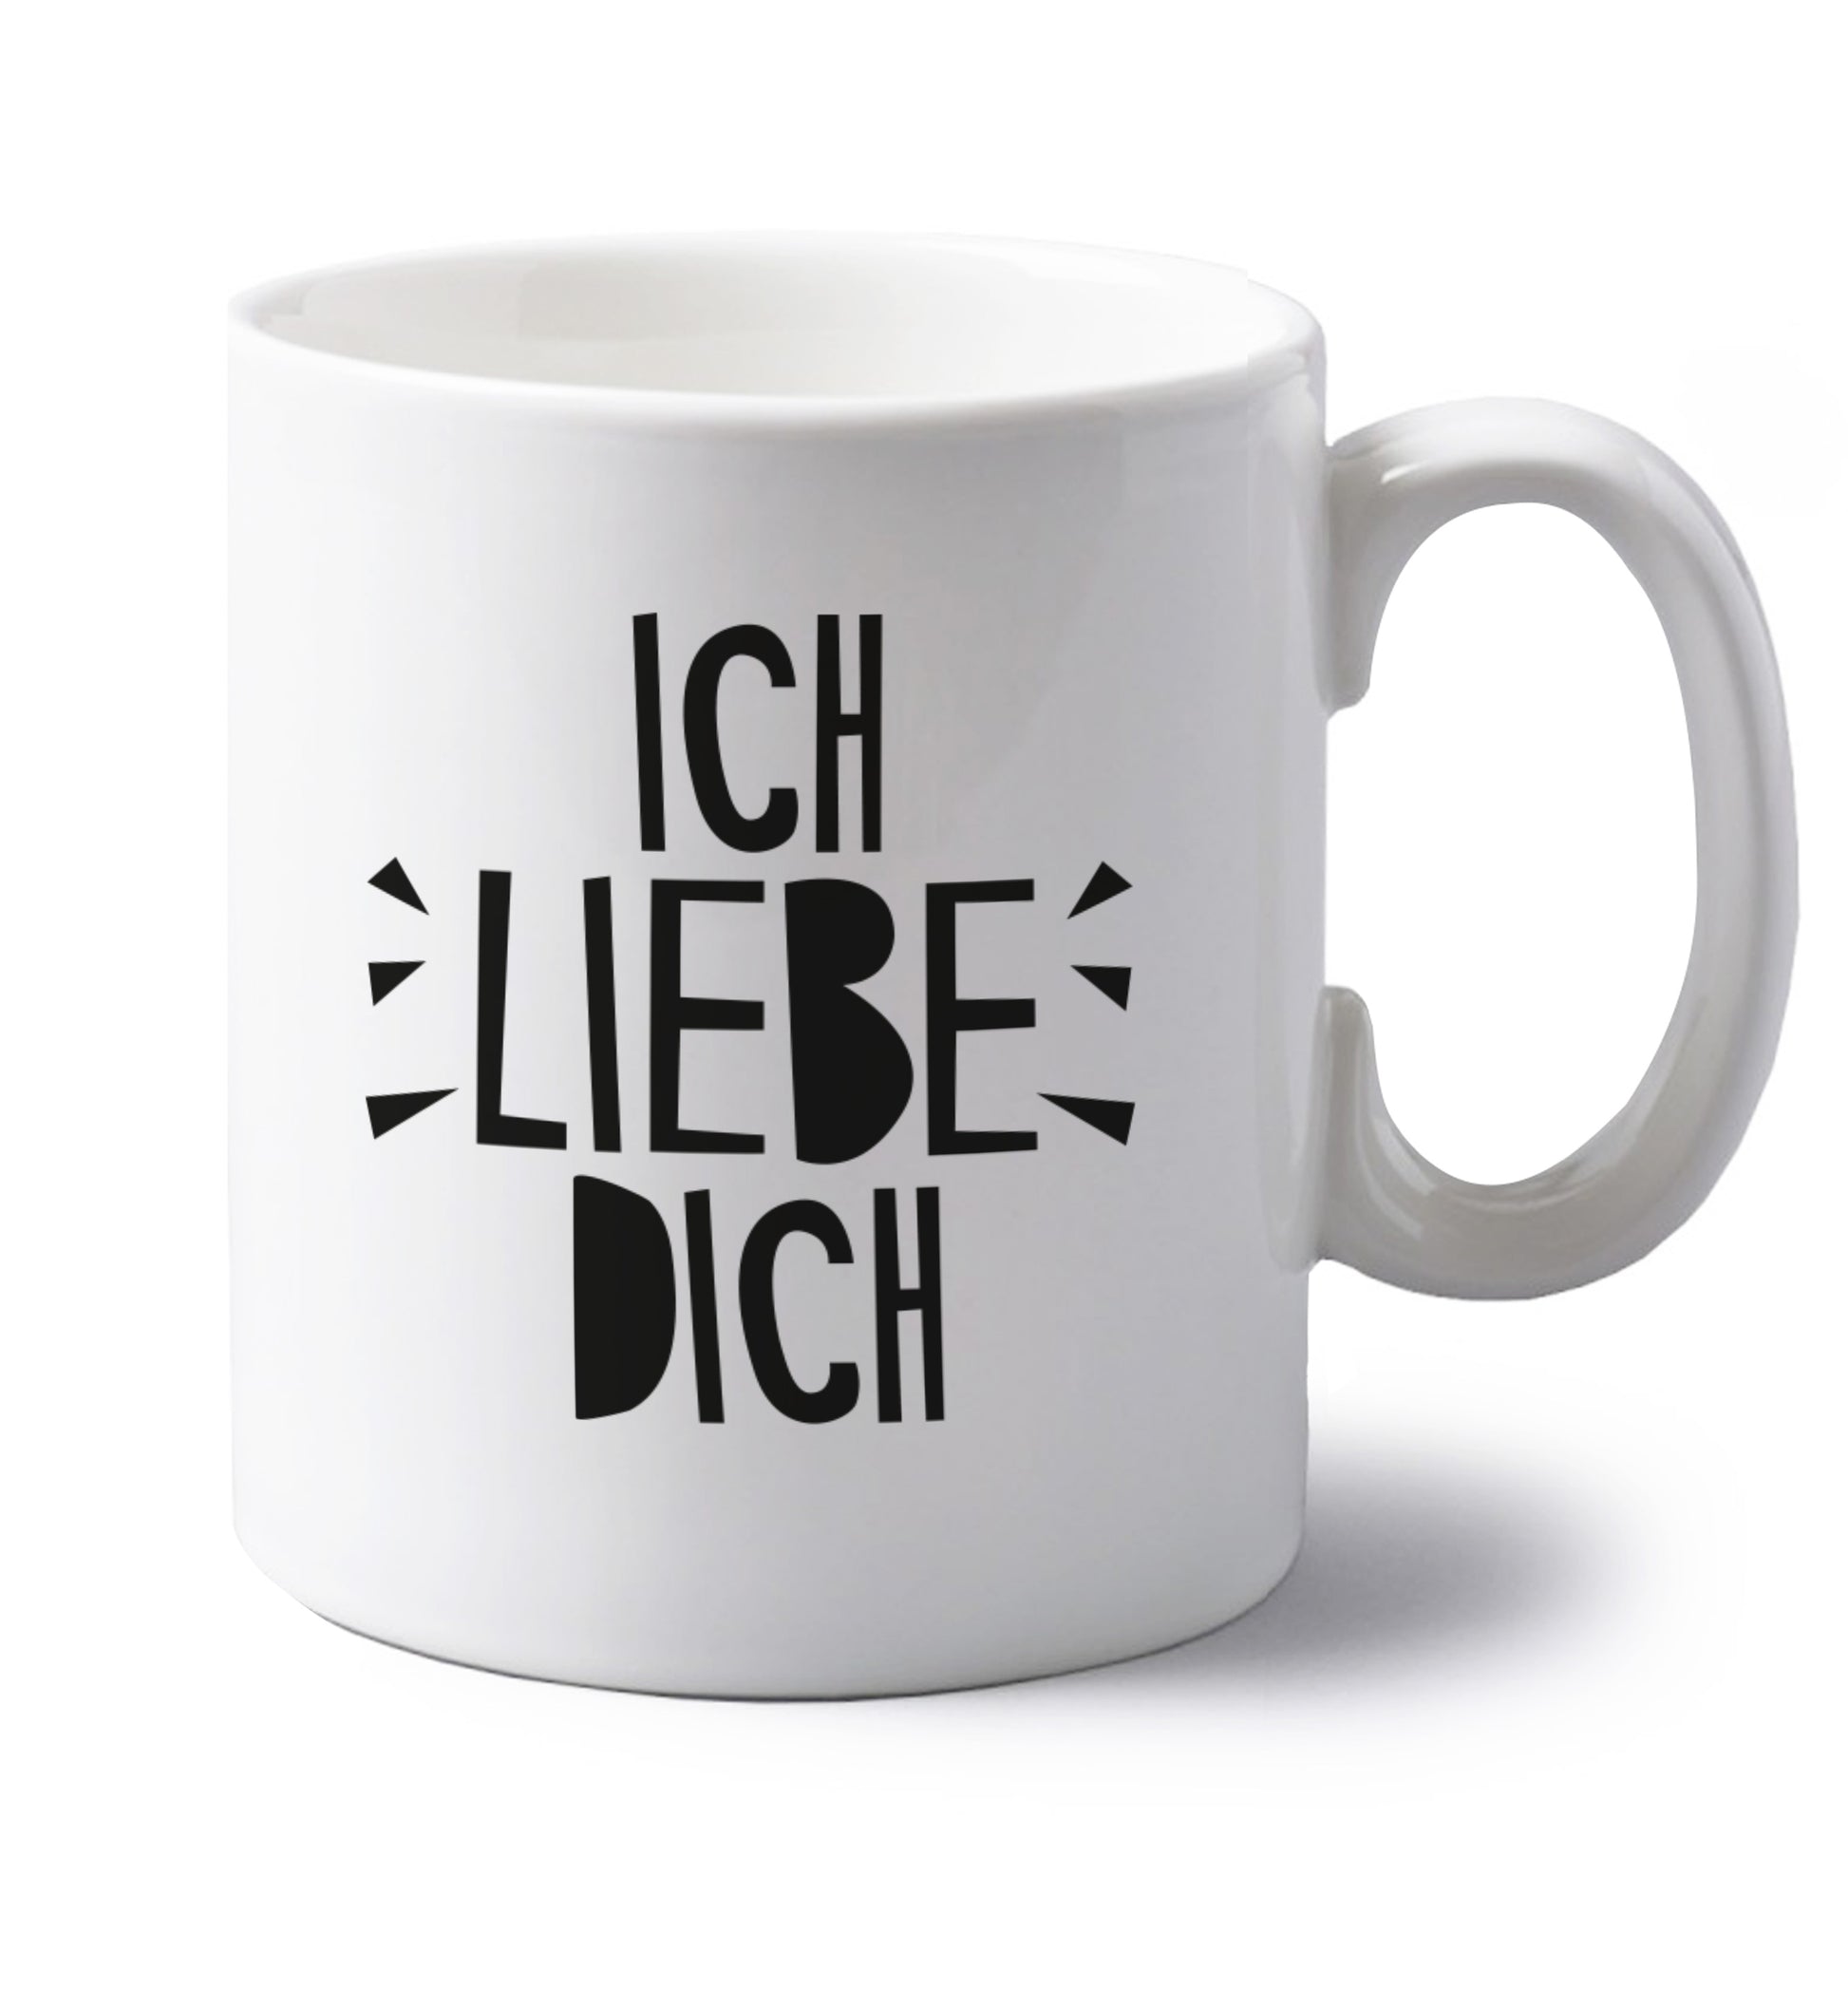 Ich liebe dich - I love you left handed white ceramic mug 